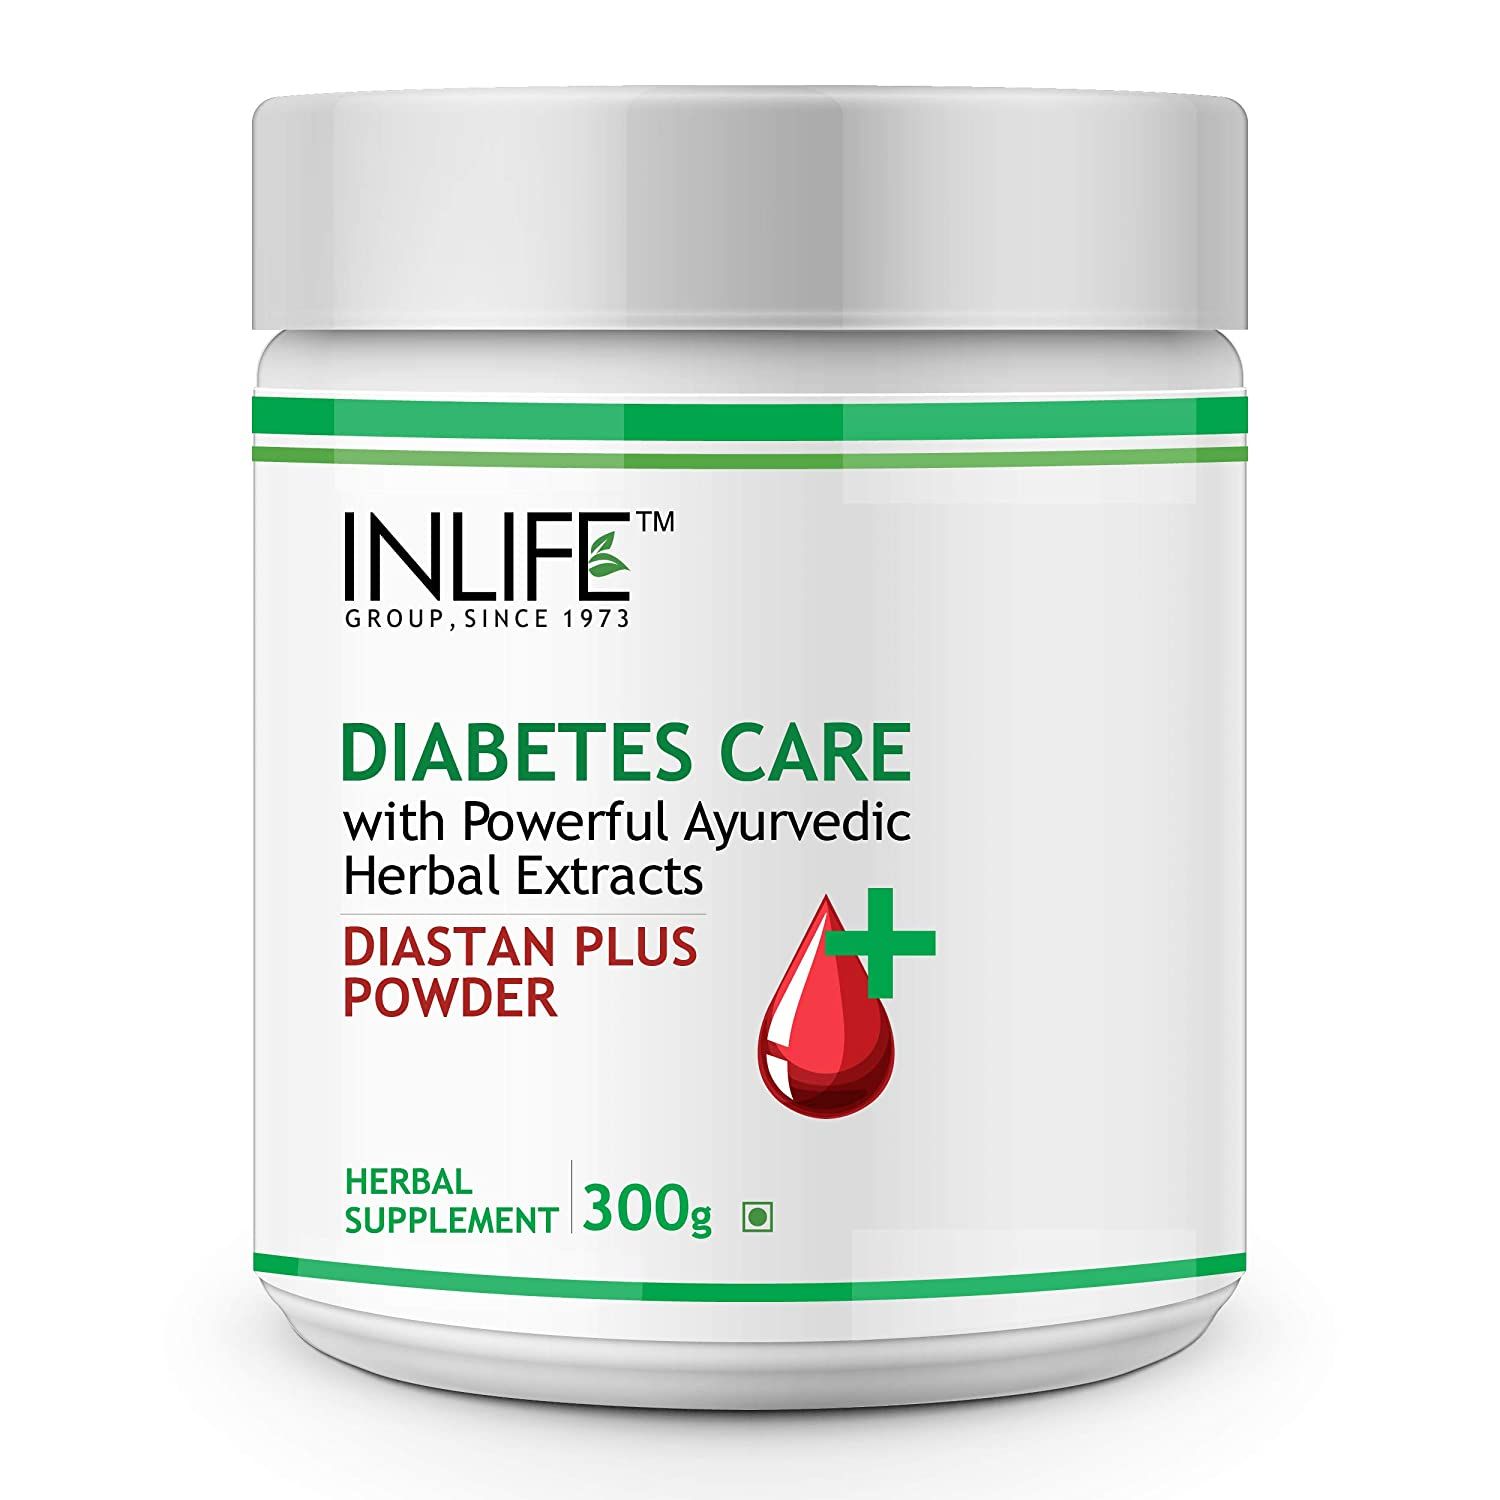 Inlife Diabetes Care Powder Image